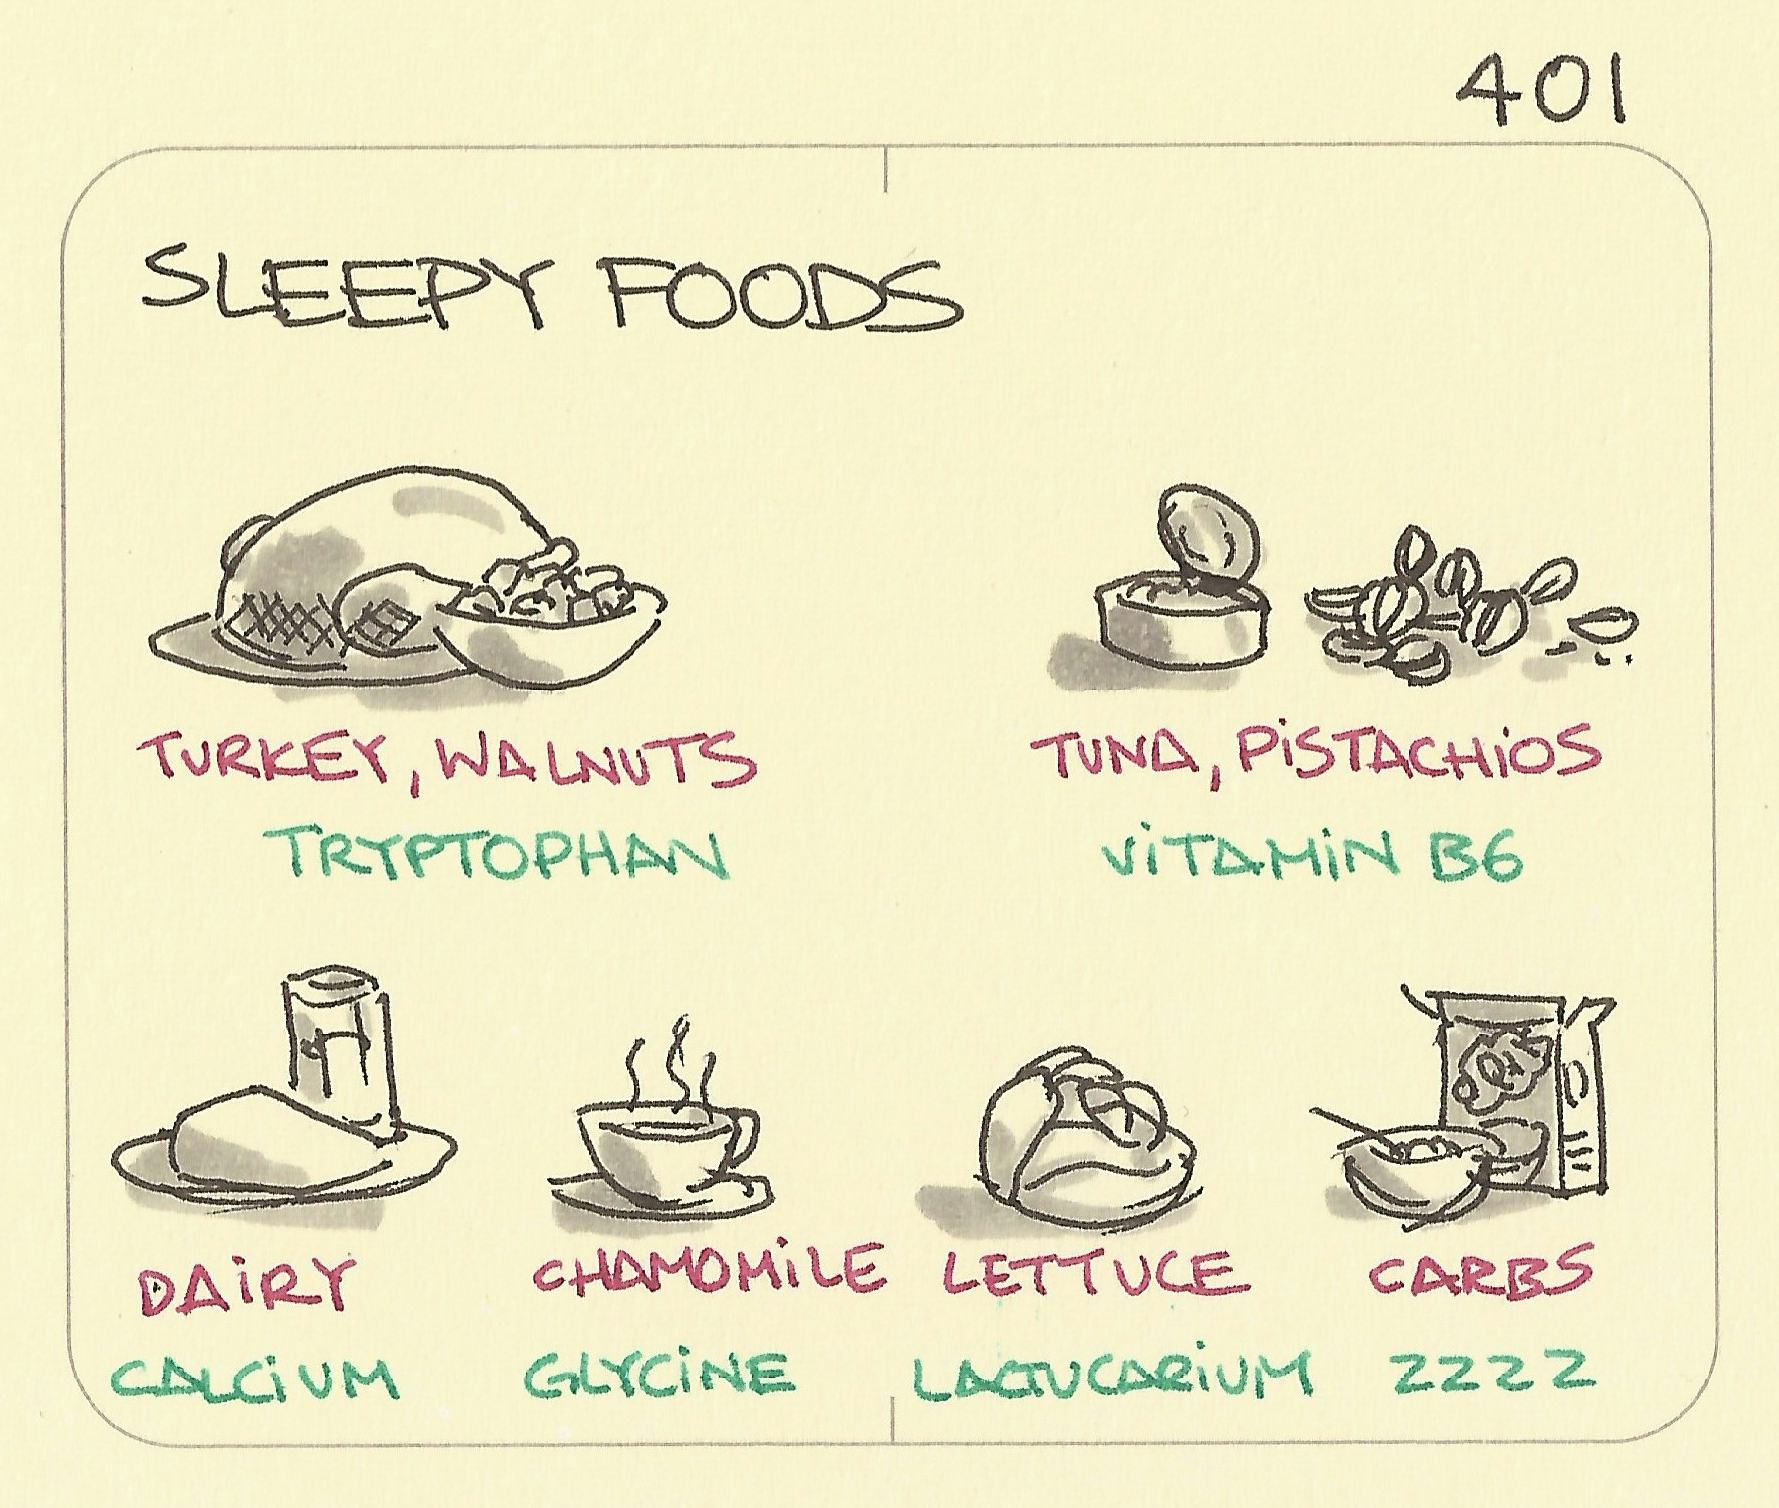 Sleepy foods - Sketchplanations